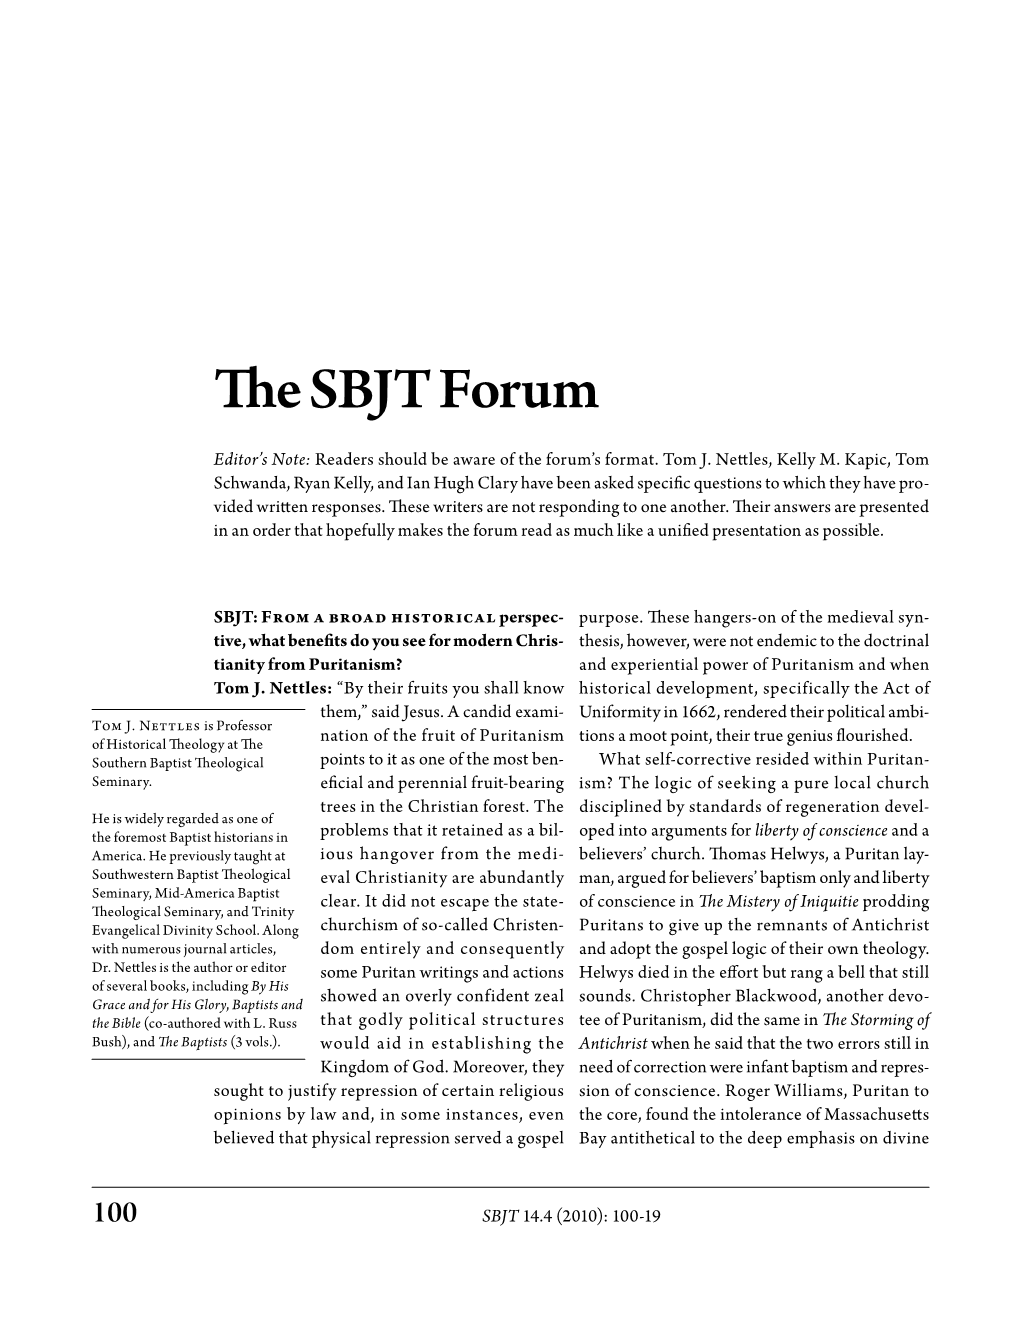 The SBJT Forum